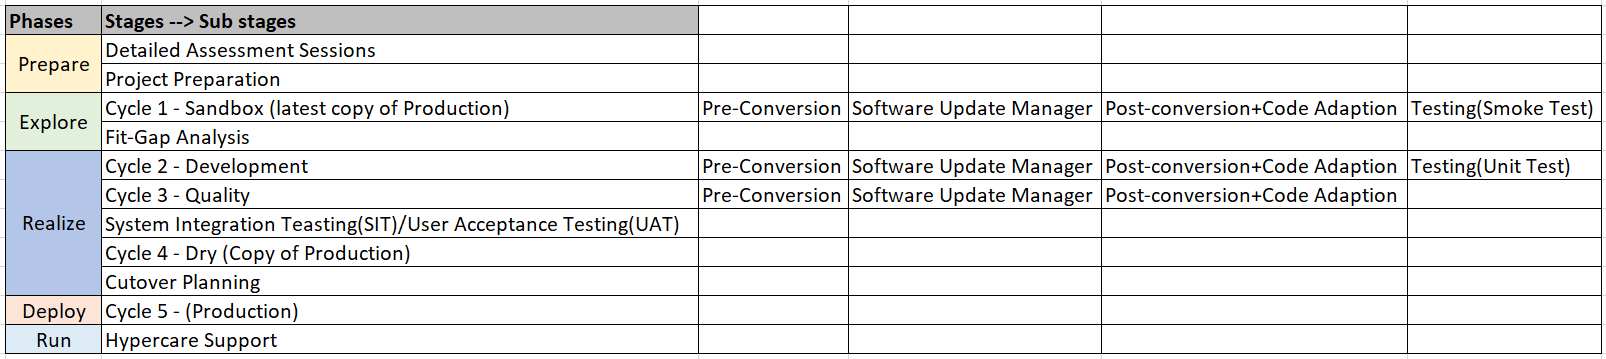 SAP S4HANA Conversion Phases Excel image